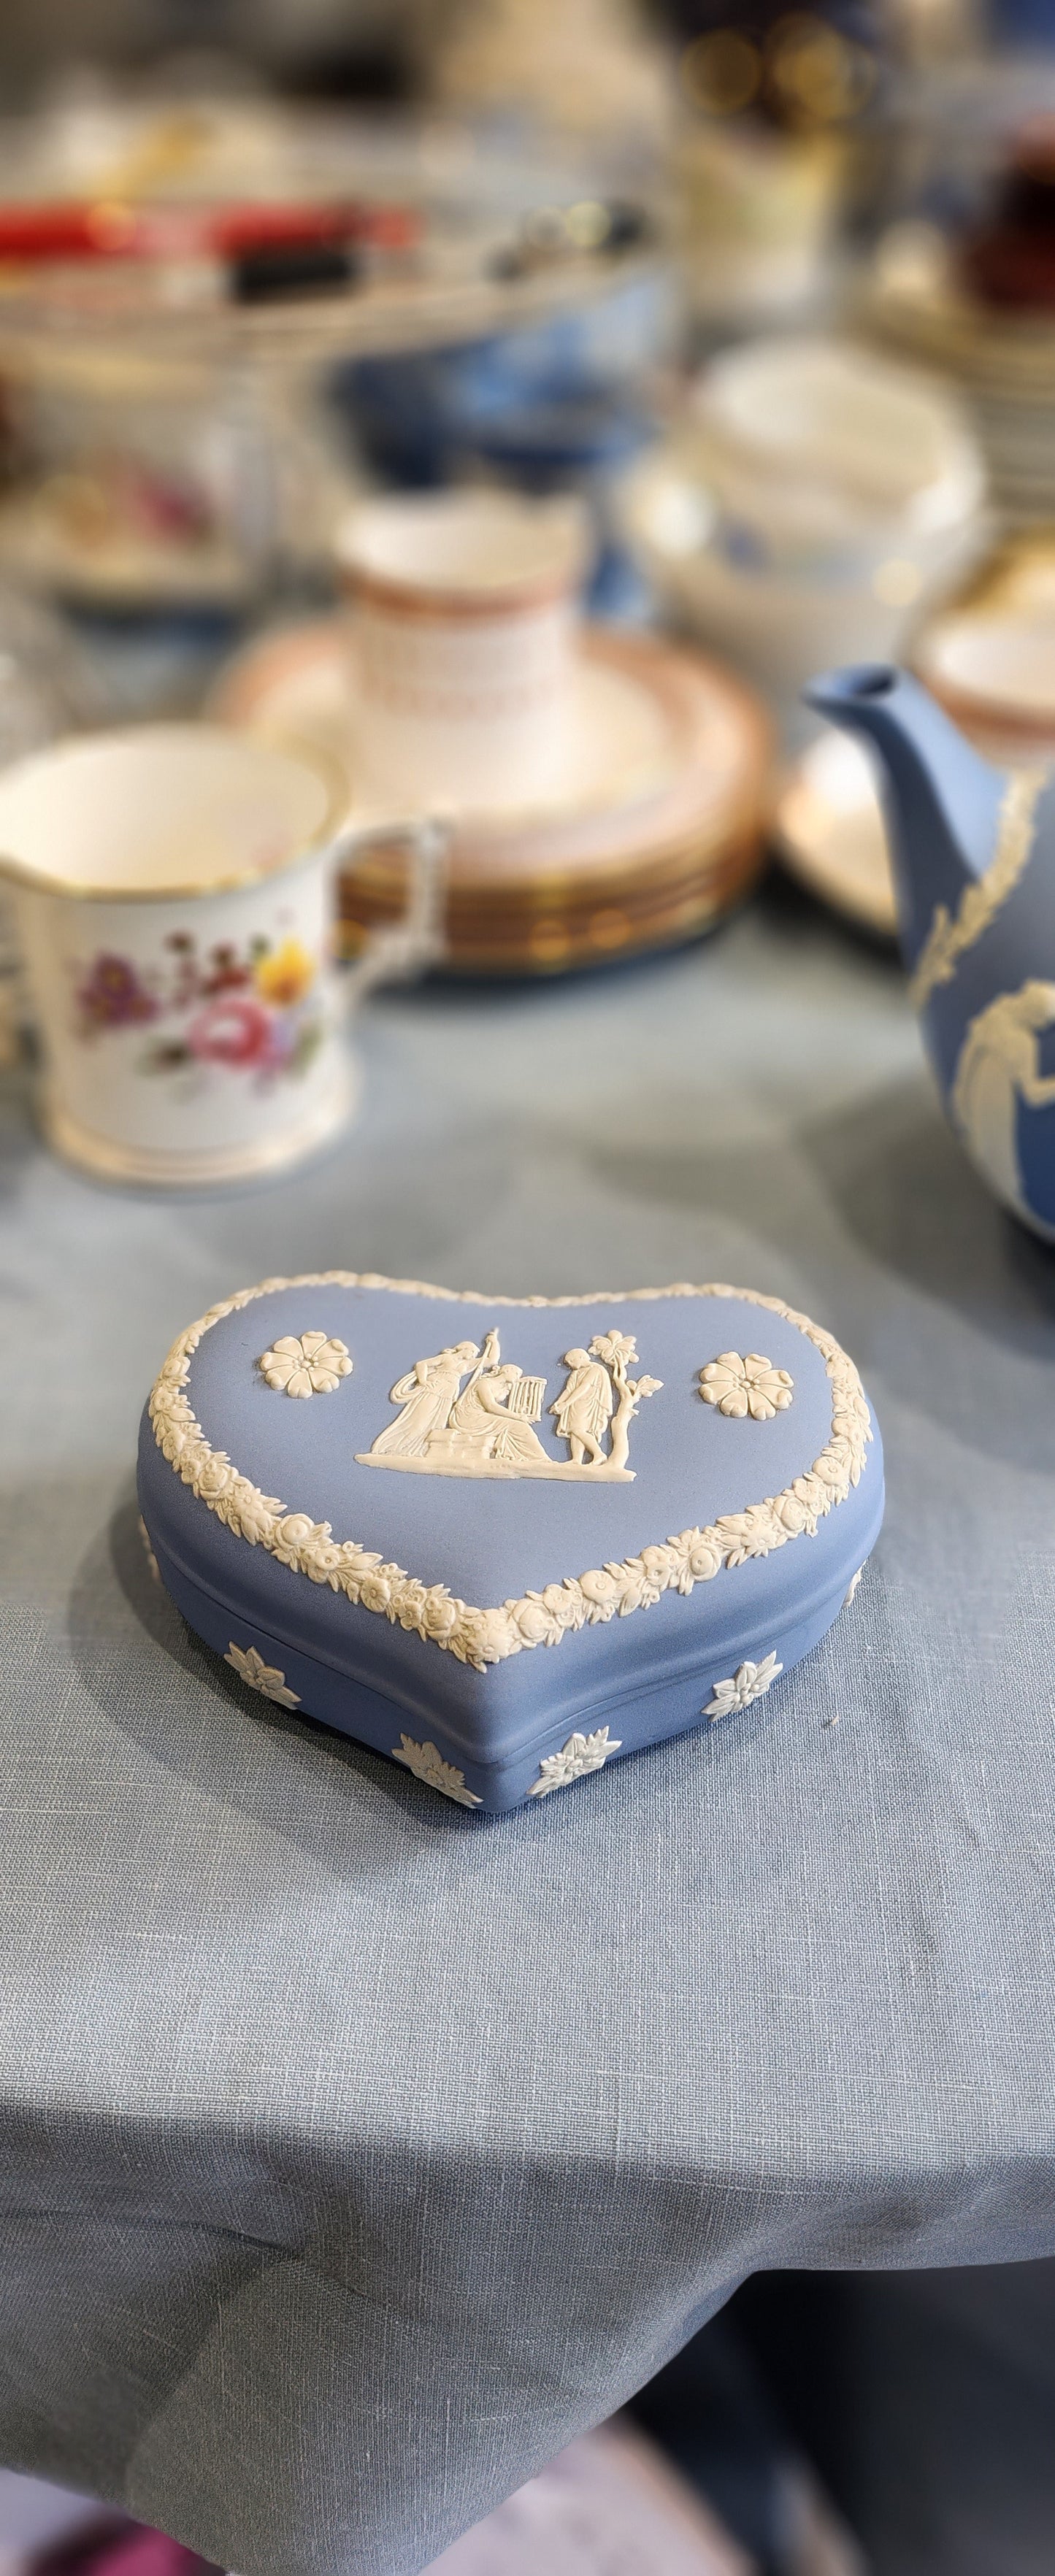 Wedgwood Jasper light blue heart shaped jewellery/tinket box